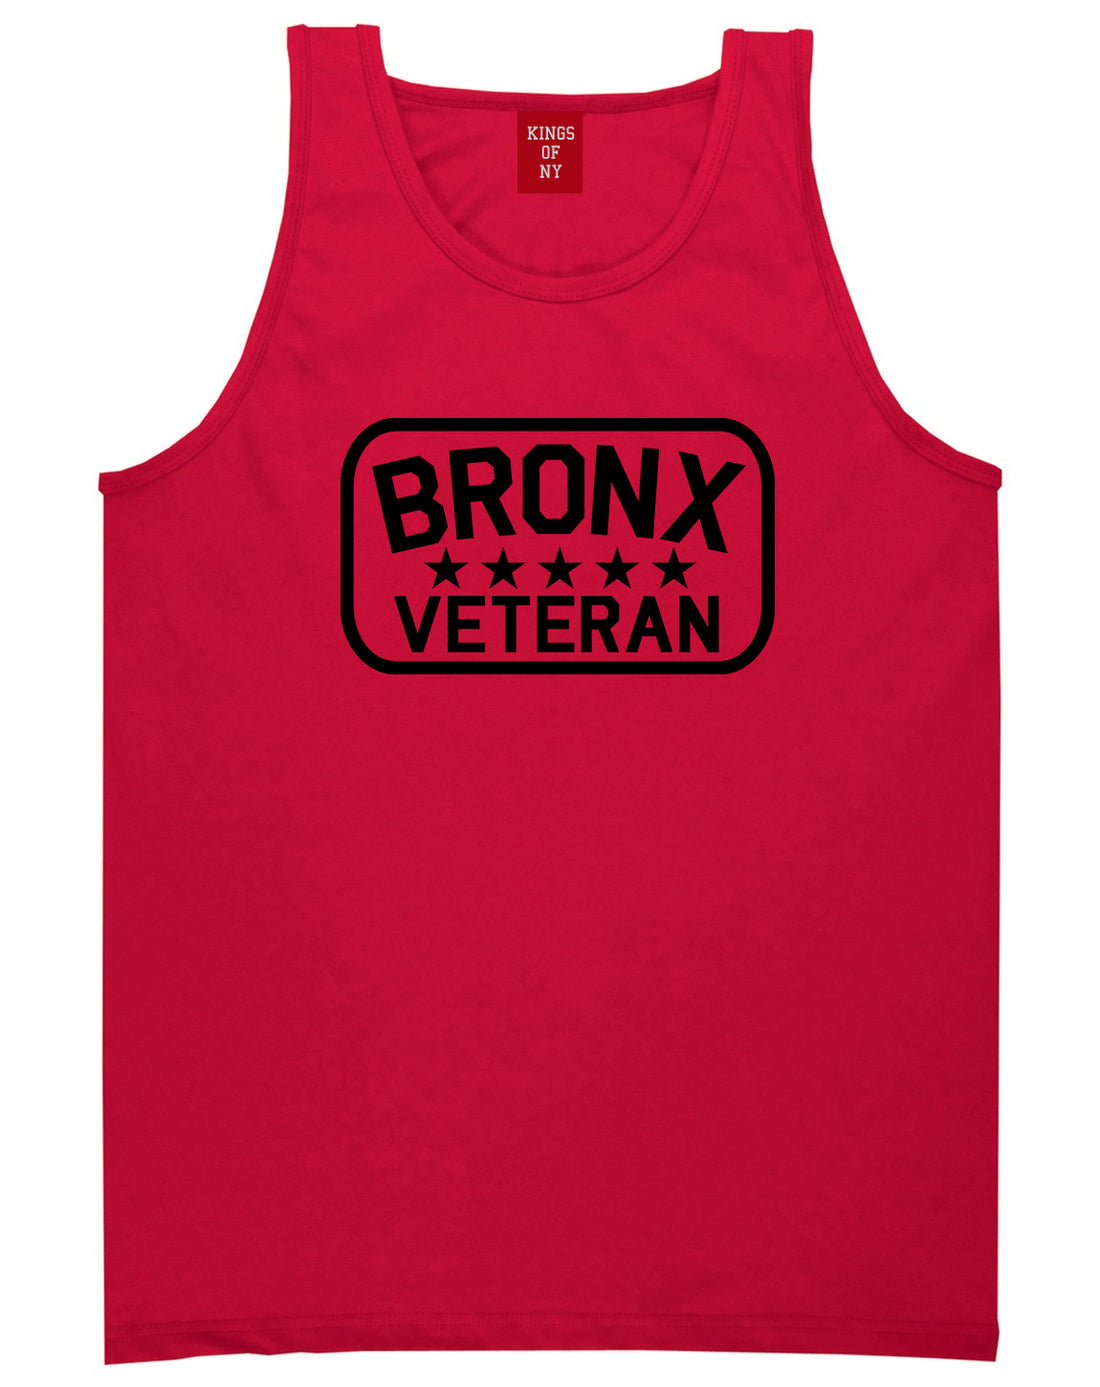 Bronx Veteran Mens Tank Top Shirt Red